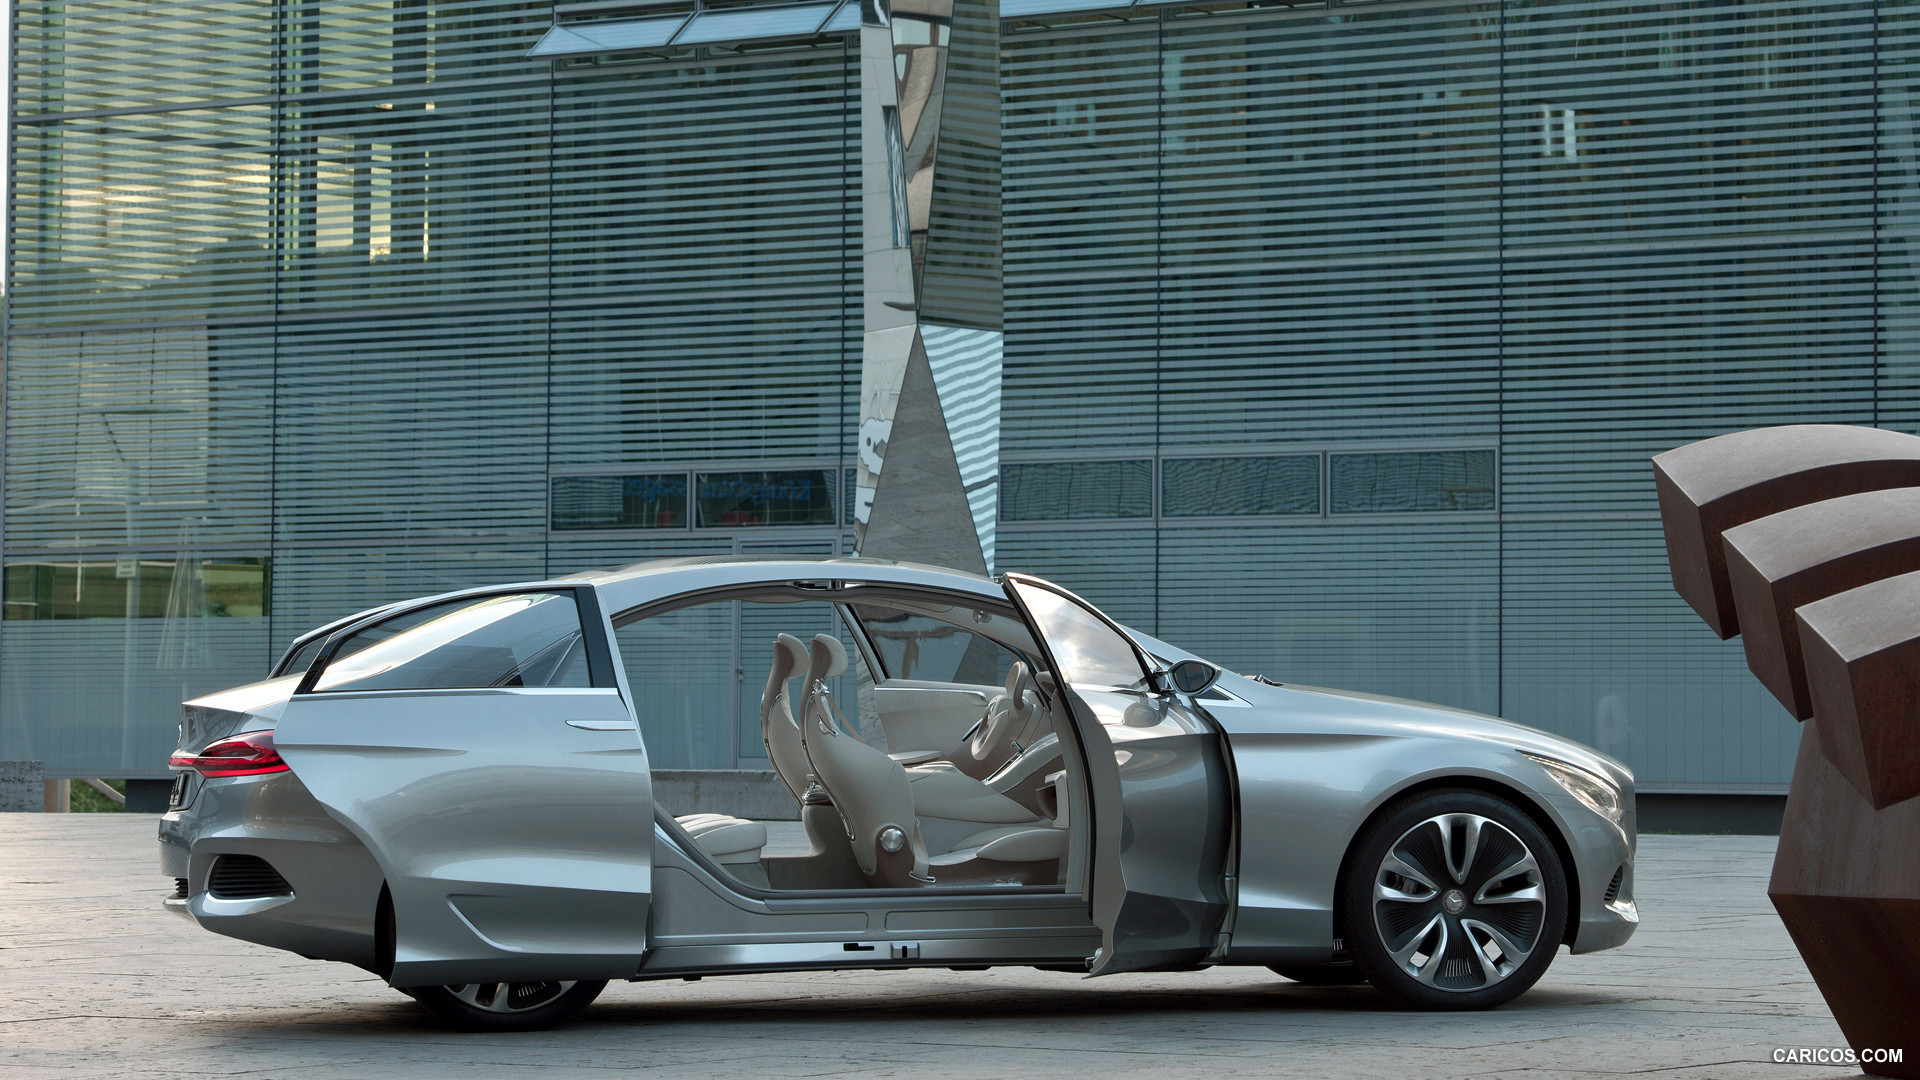 Mercedes-Benz F800 Style Concept (2010) - Doors Open - Side, #12 of 120